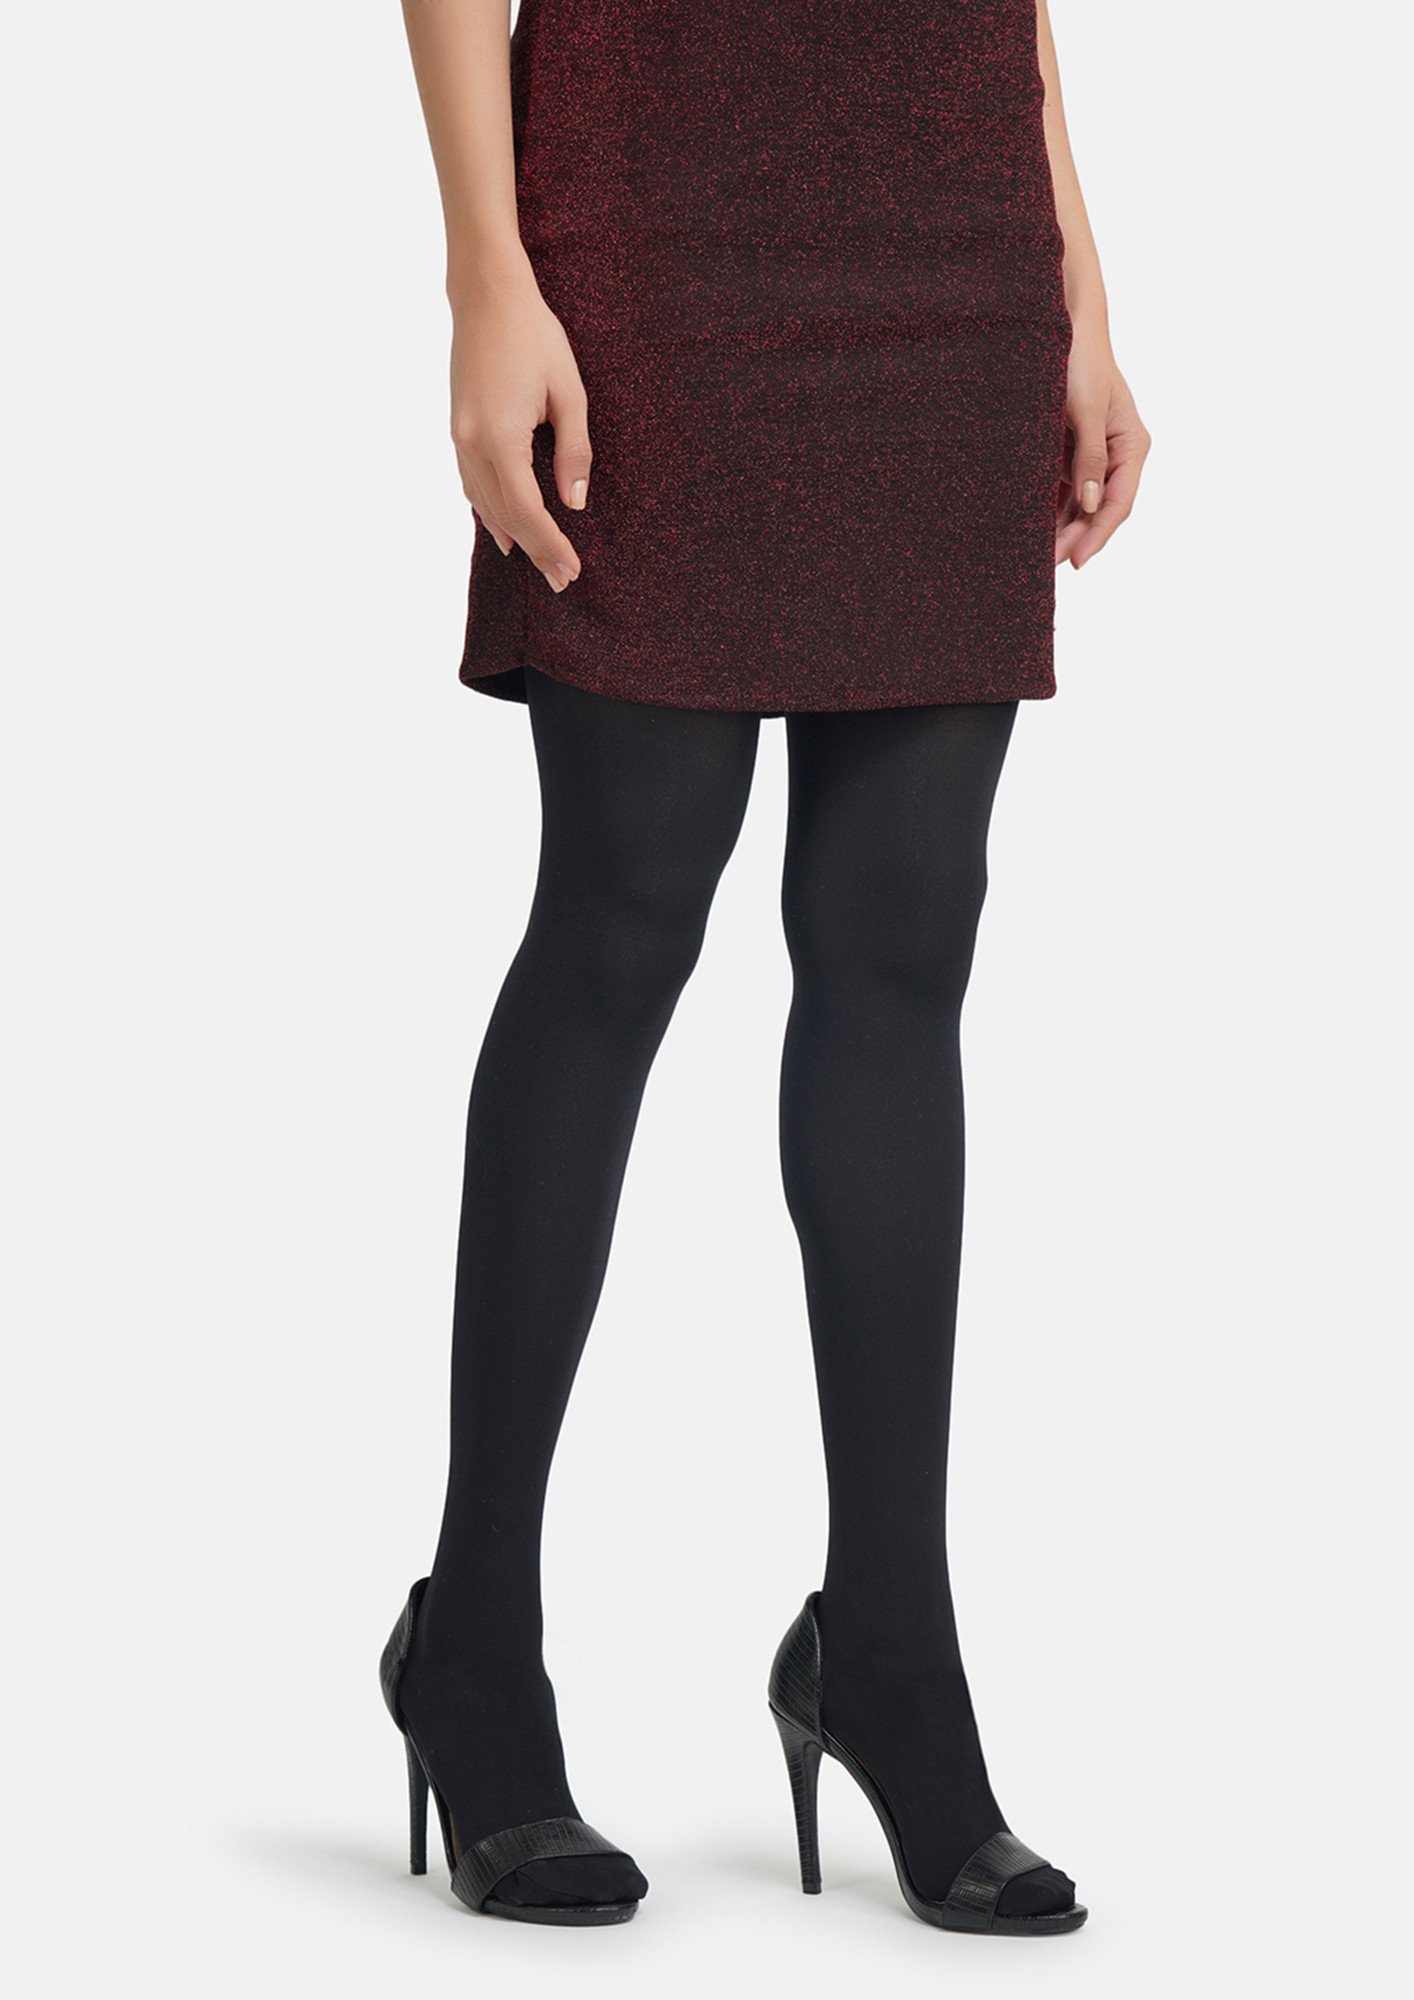 Buy NEXT2SKIN Women Nylon Opaque Pantyhose Stockings With Super